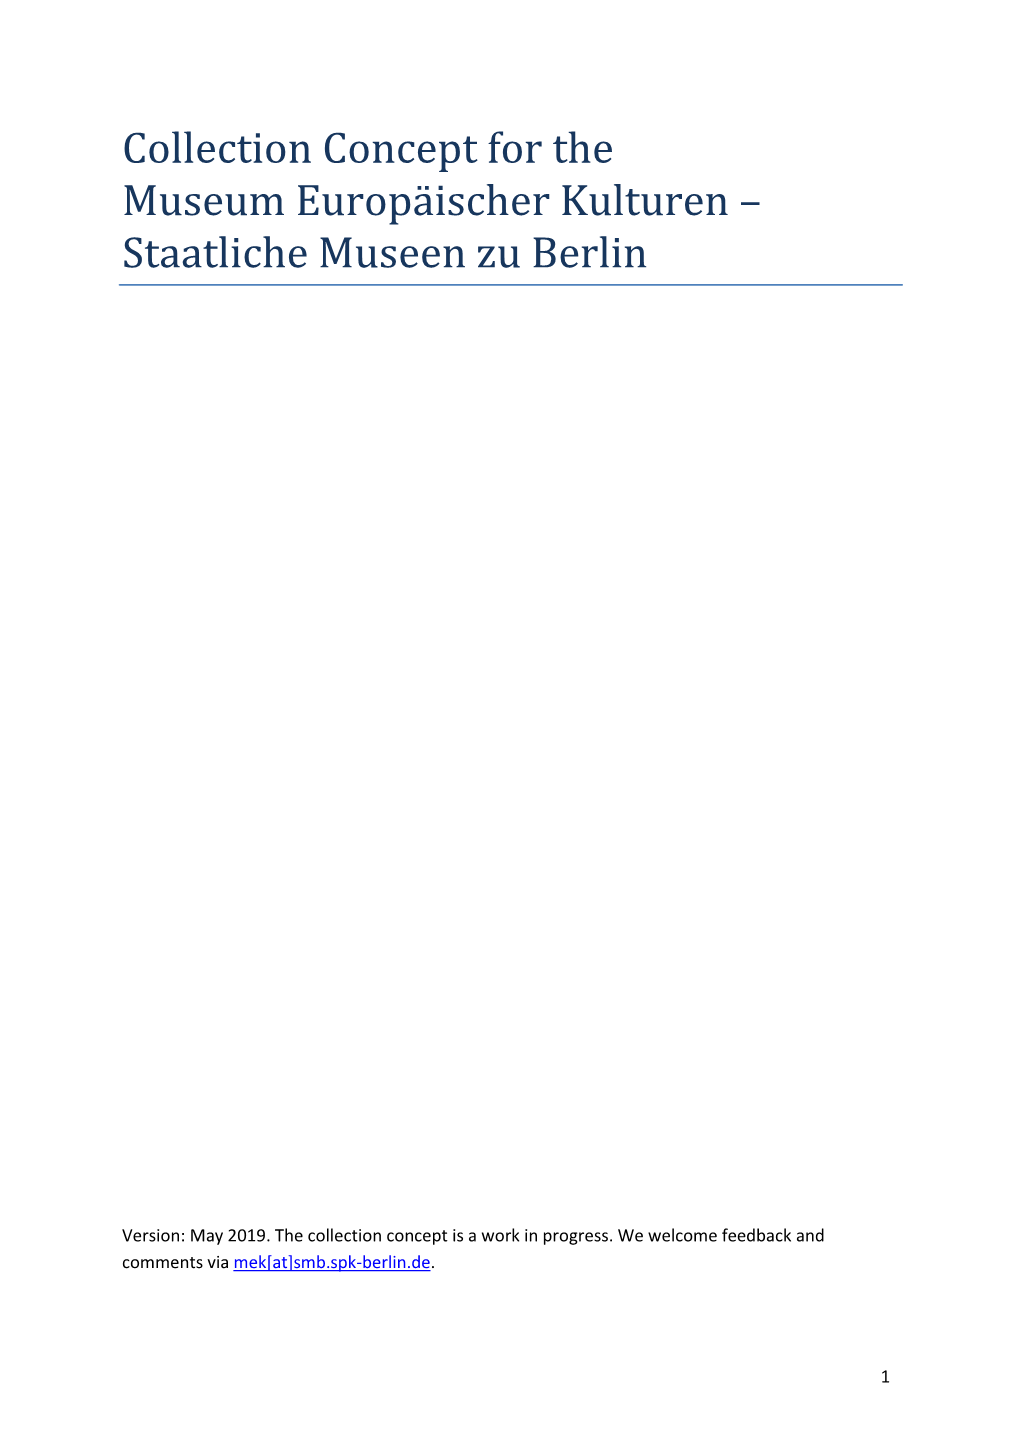 Collection Concept for the Museum Europäischer Kulturen – Staatliche Museen Zu Berlin